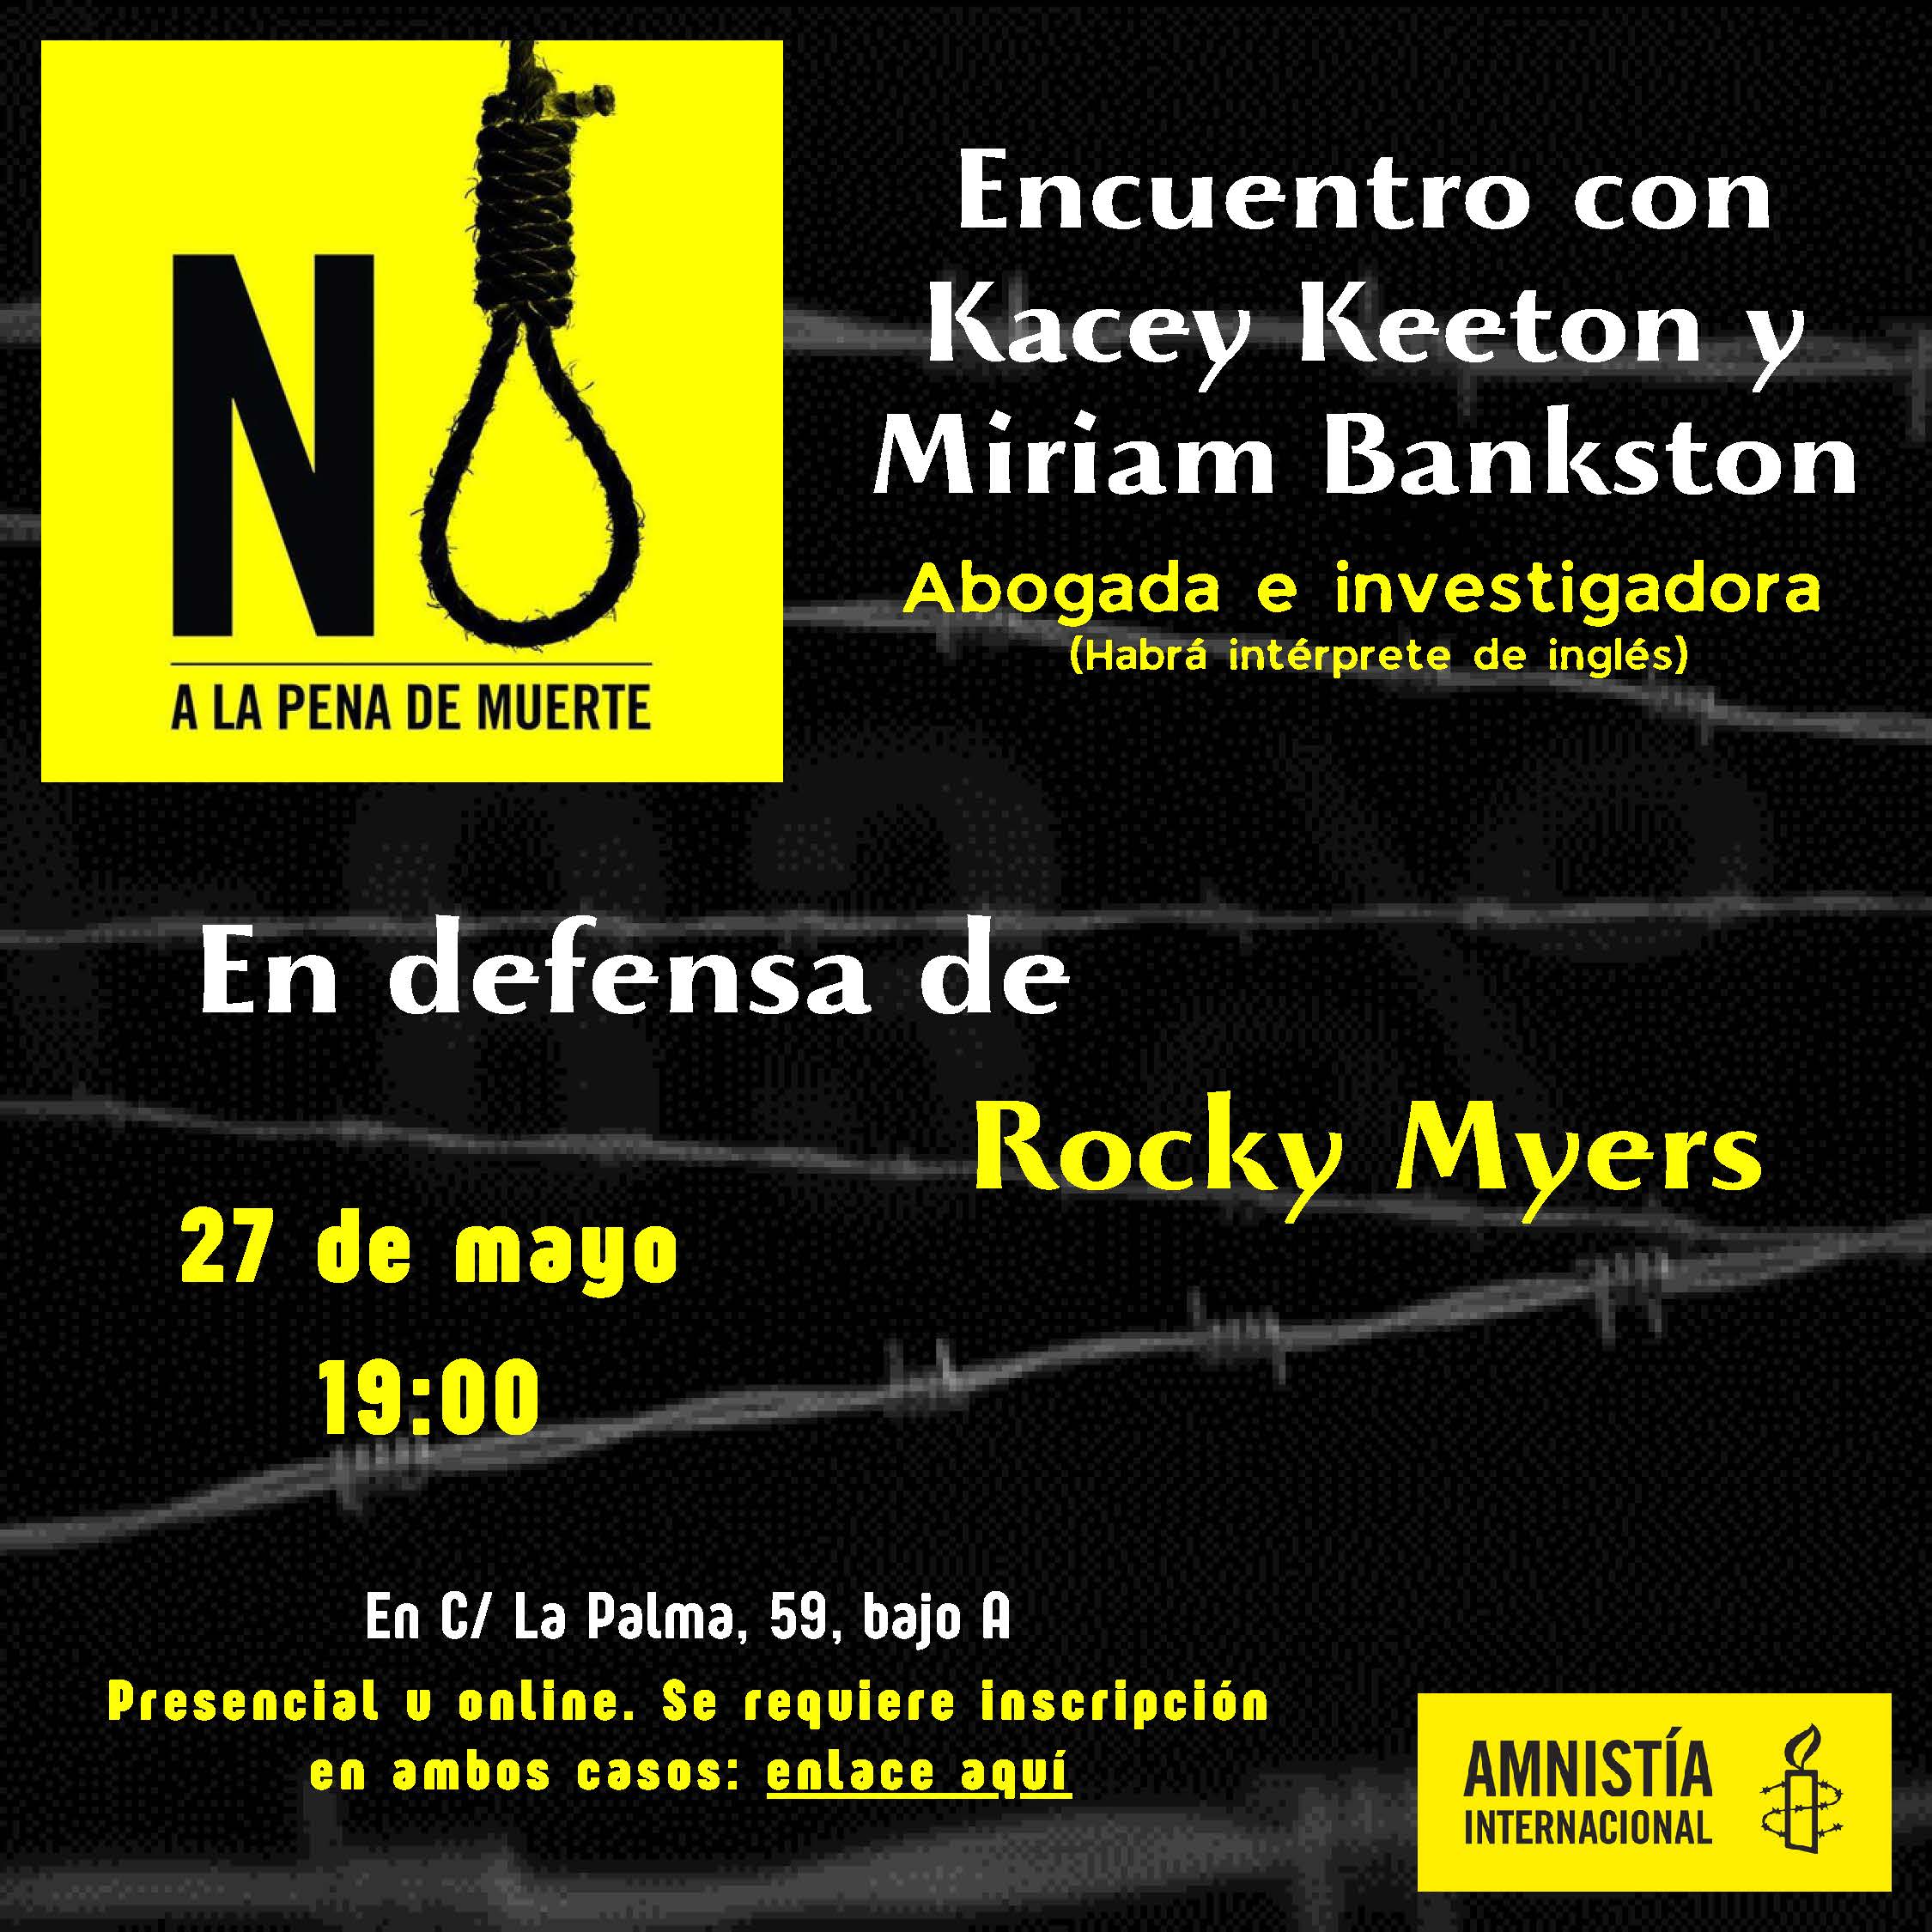 [Madrid] En defensa de Rocky Myers